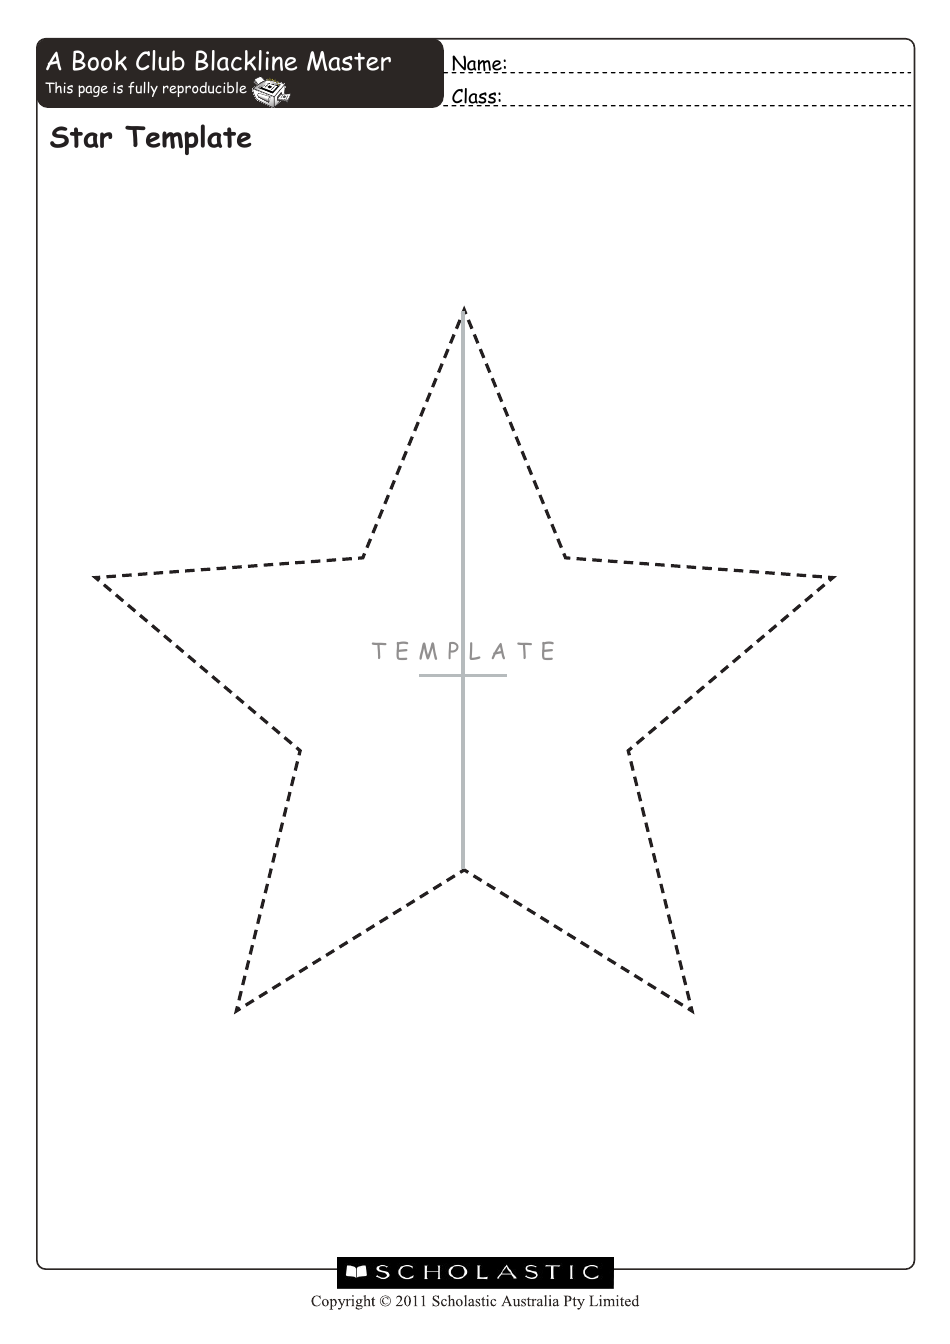 Star Template - Scholastic